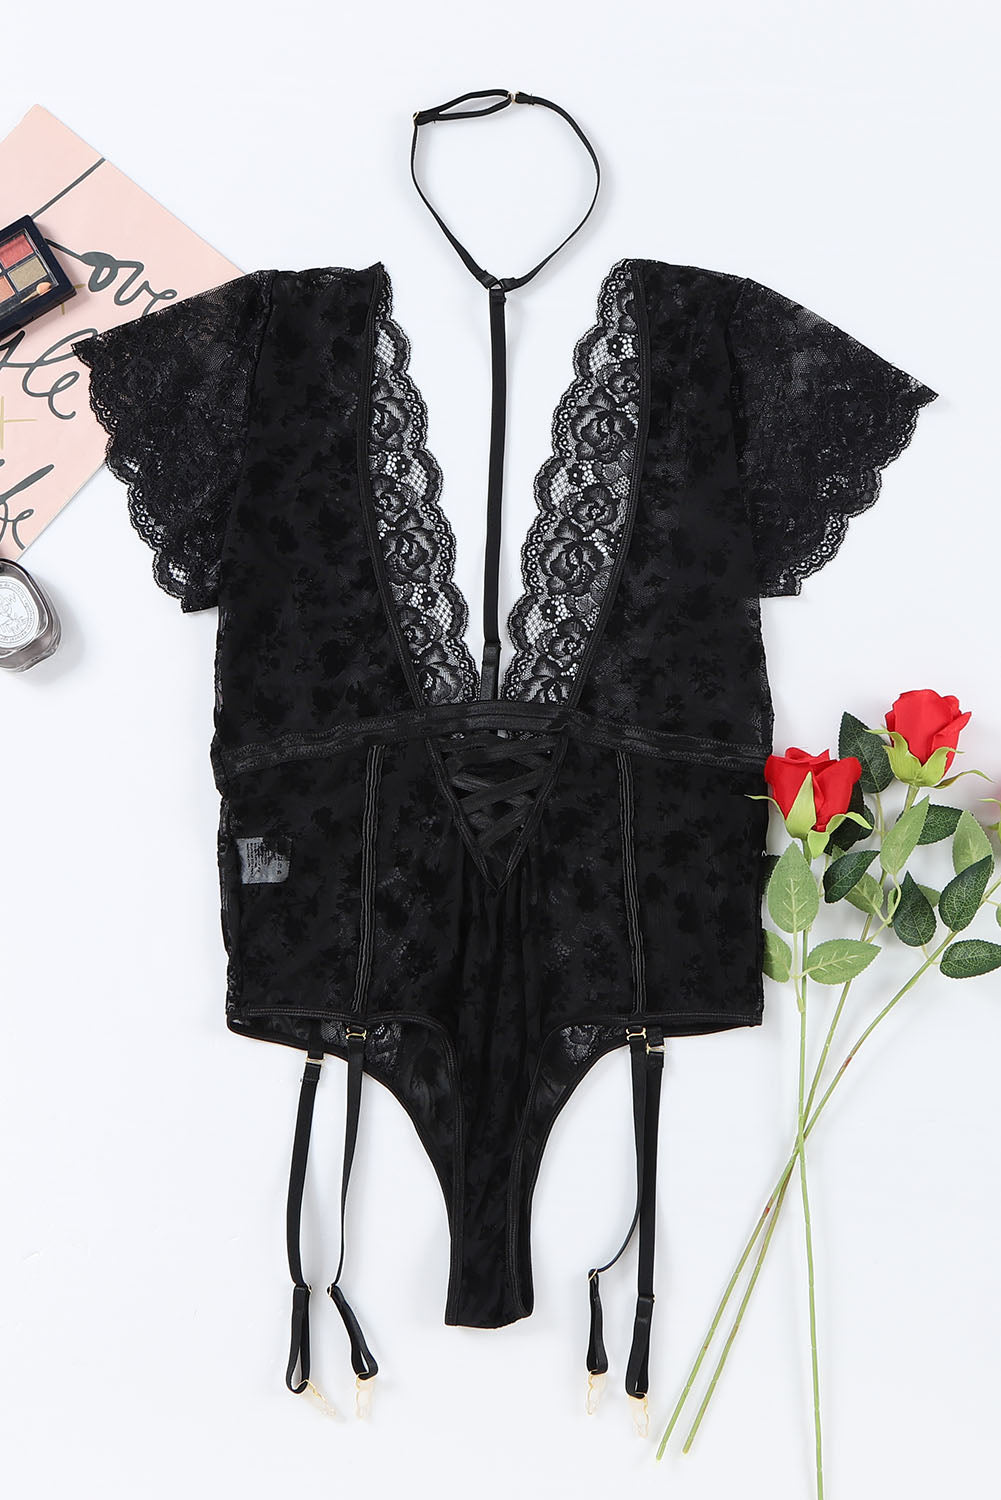 Black Plus Size Strappy Floral Lace Mesh Teddy Lingerie